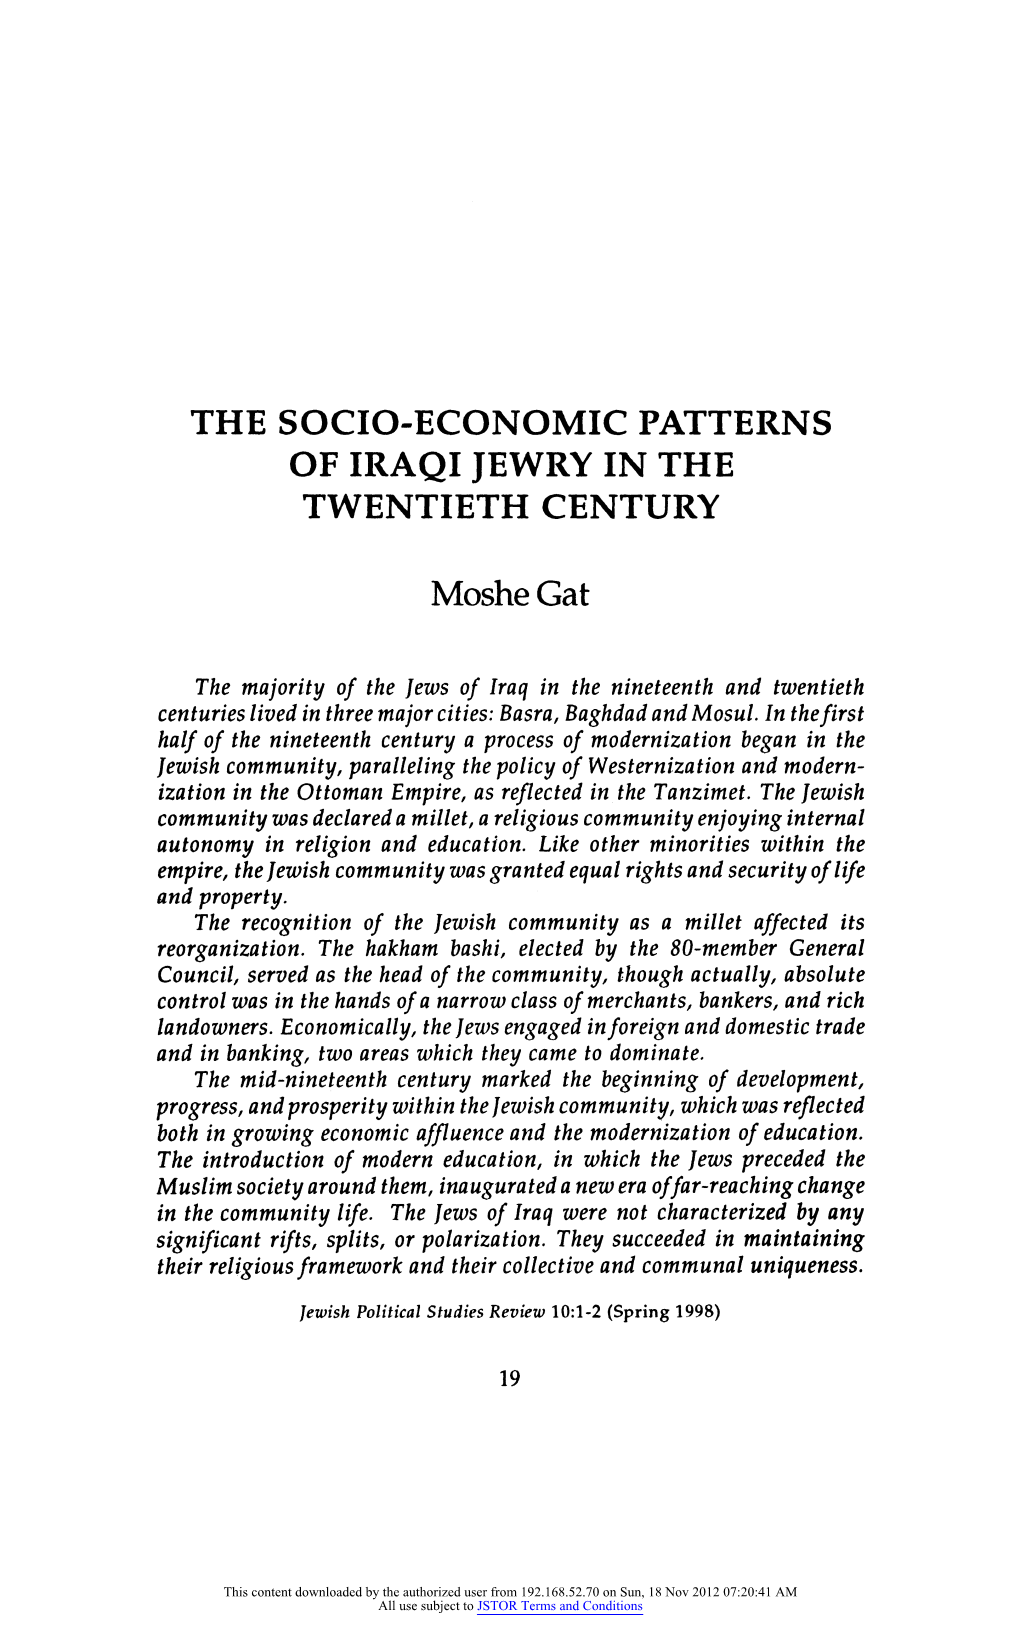 The Socio-Economic Patterns of Iraqi Jewry in the Twentieth Century